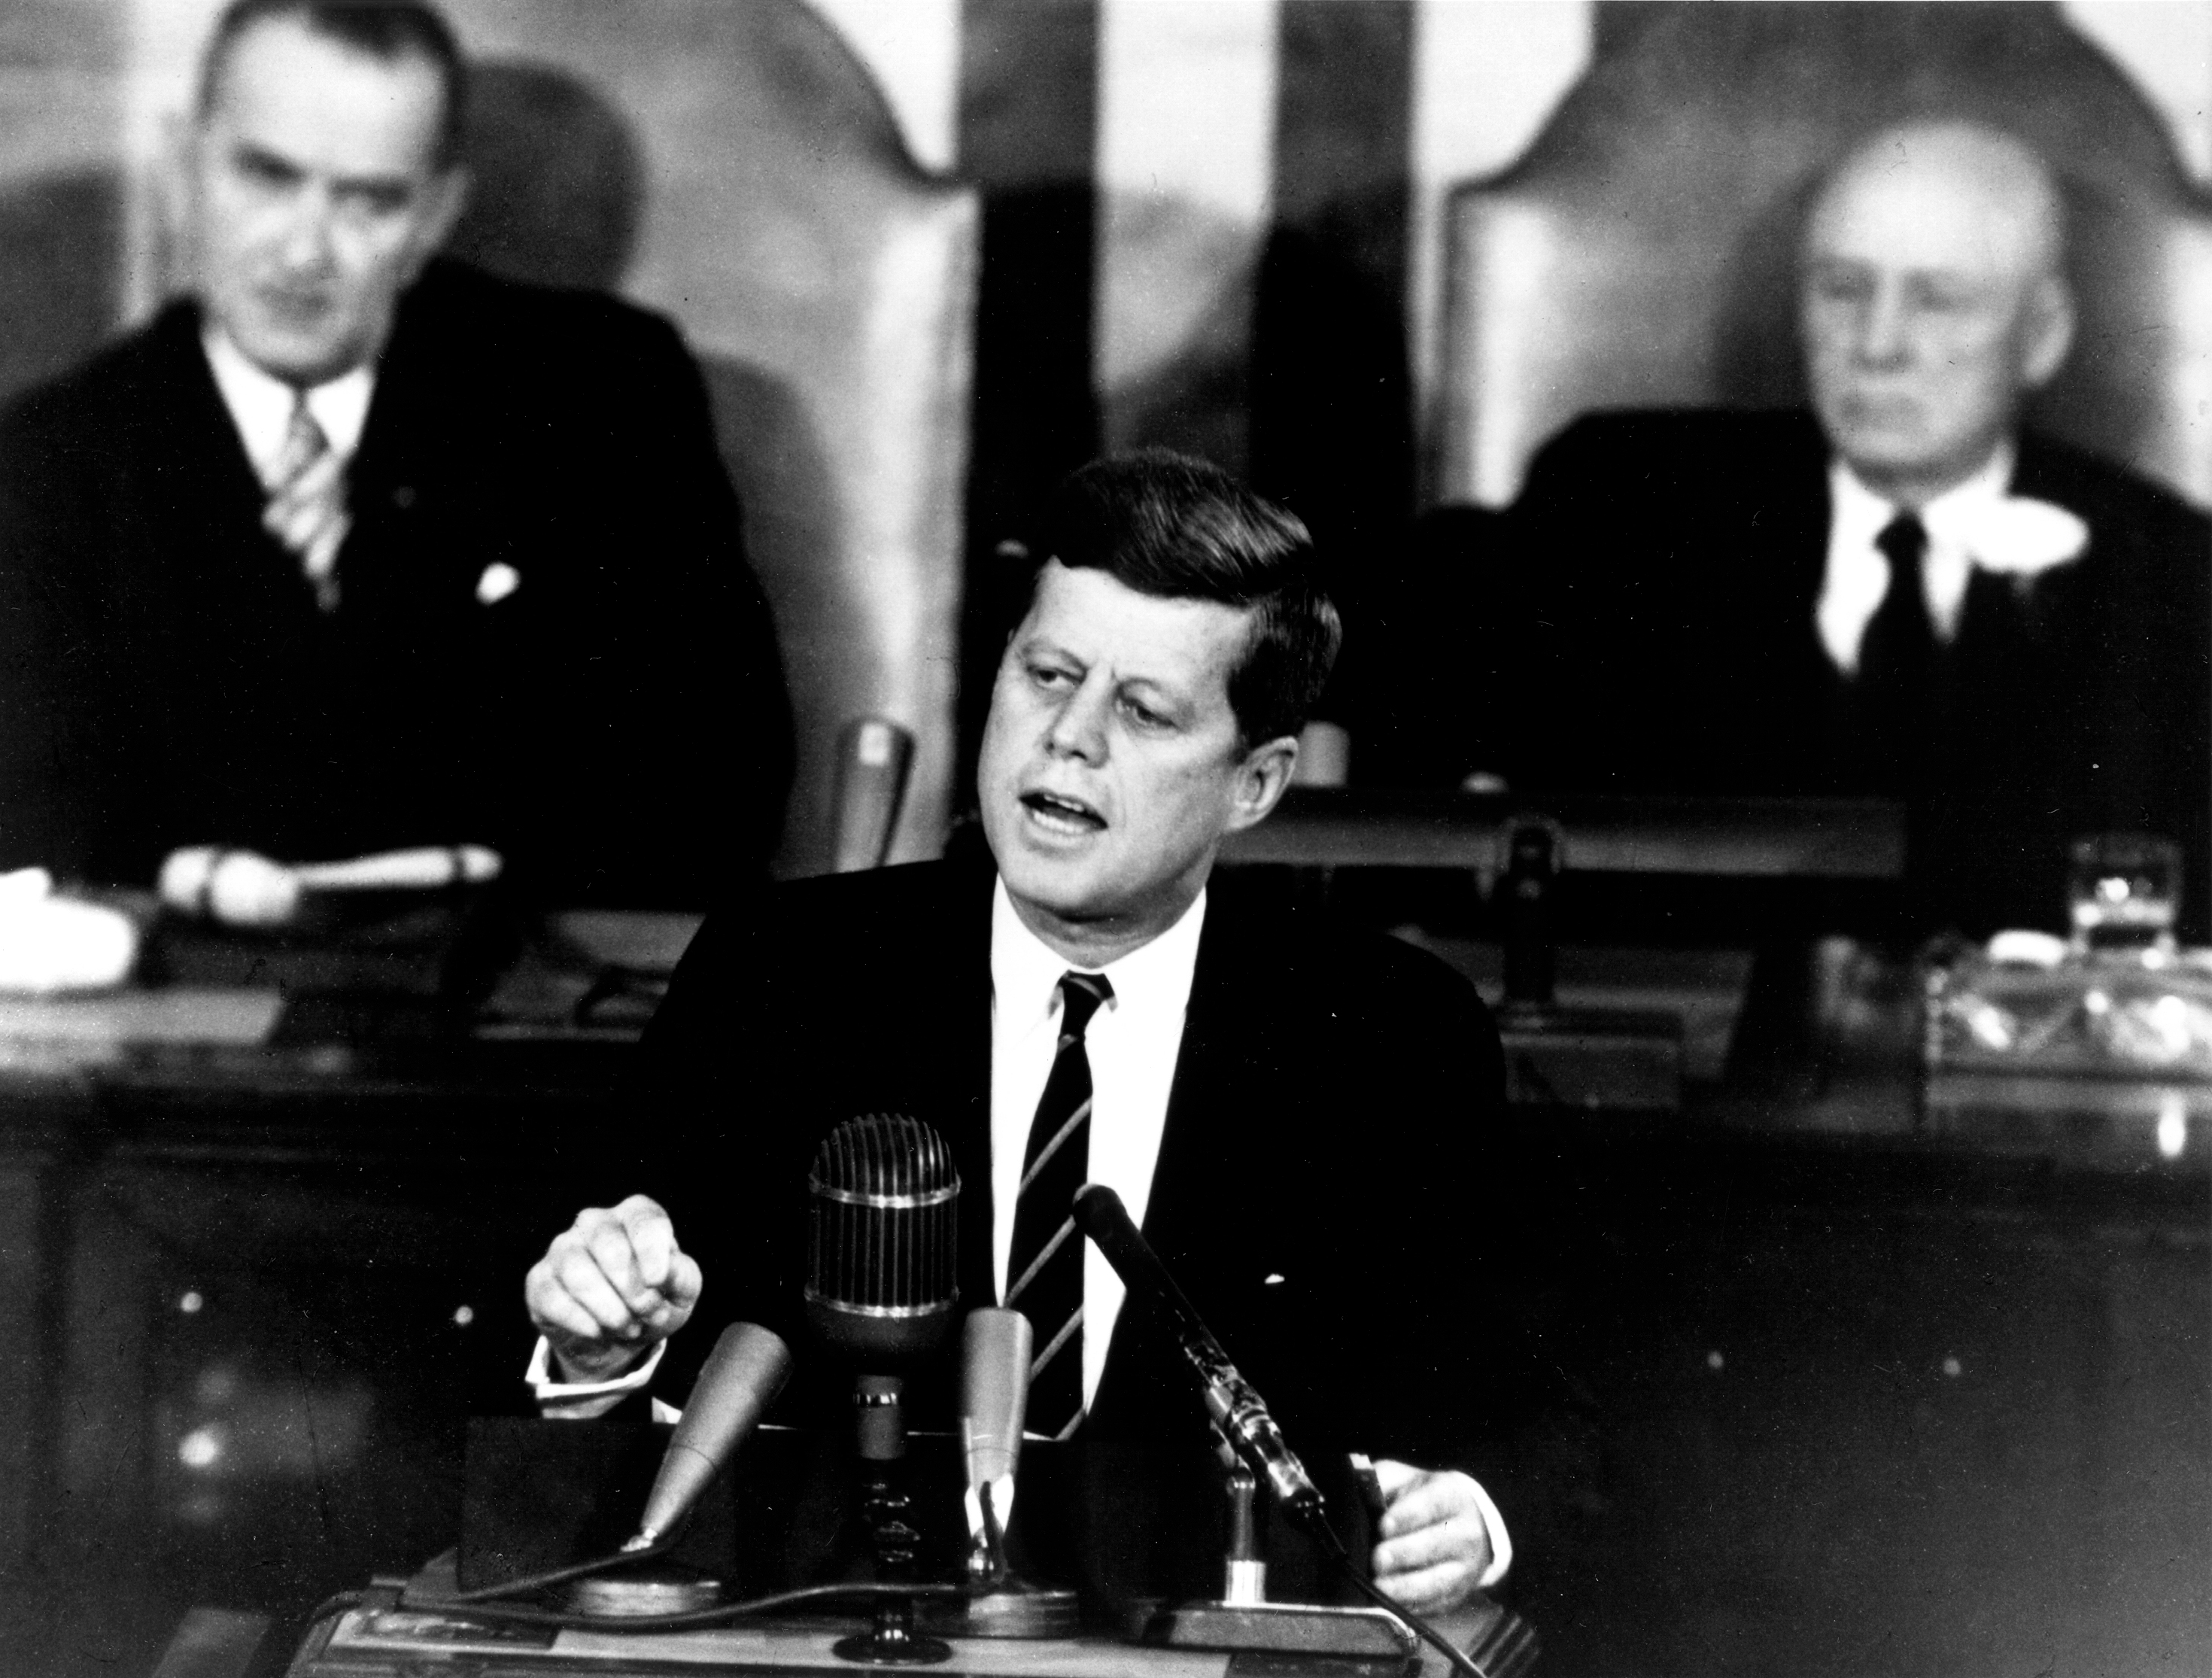 President John F Kennedy speaking to Congress.